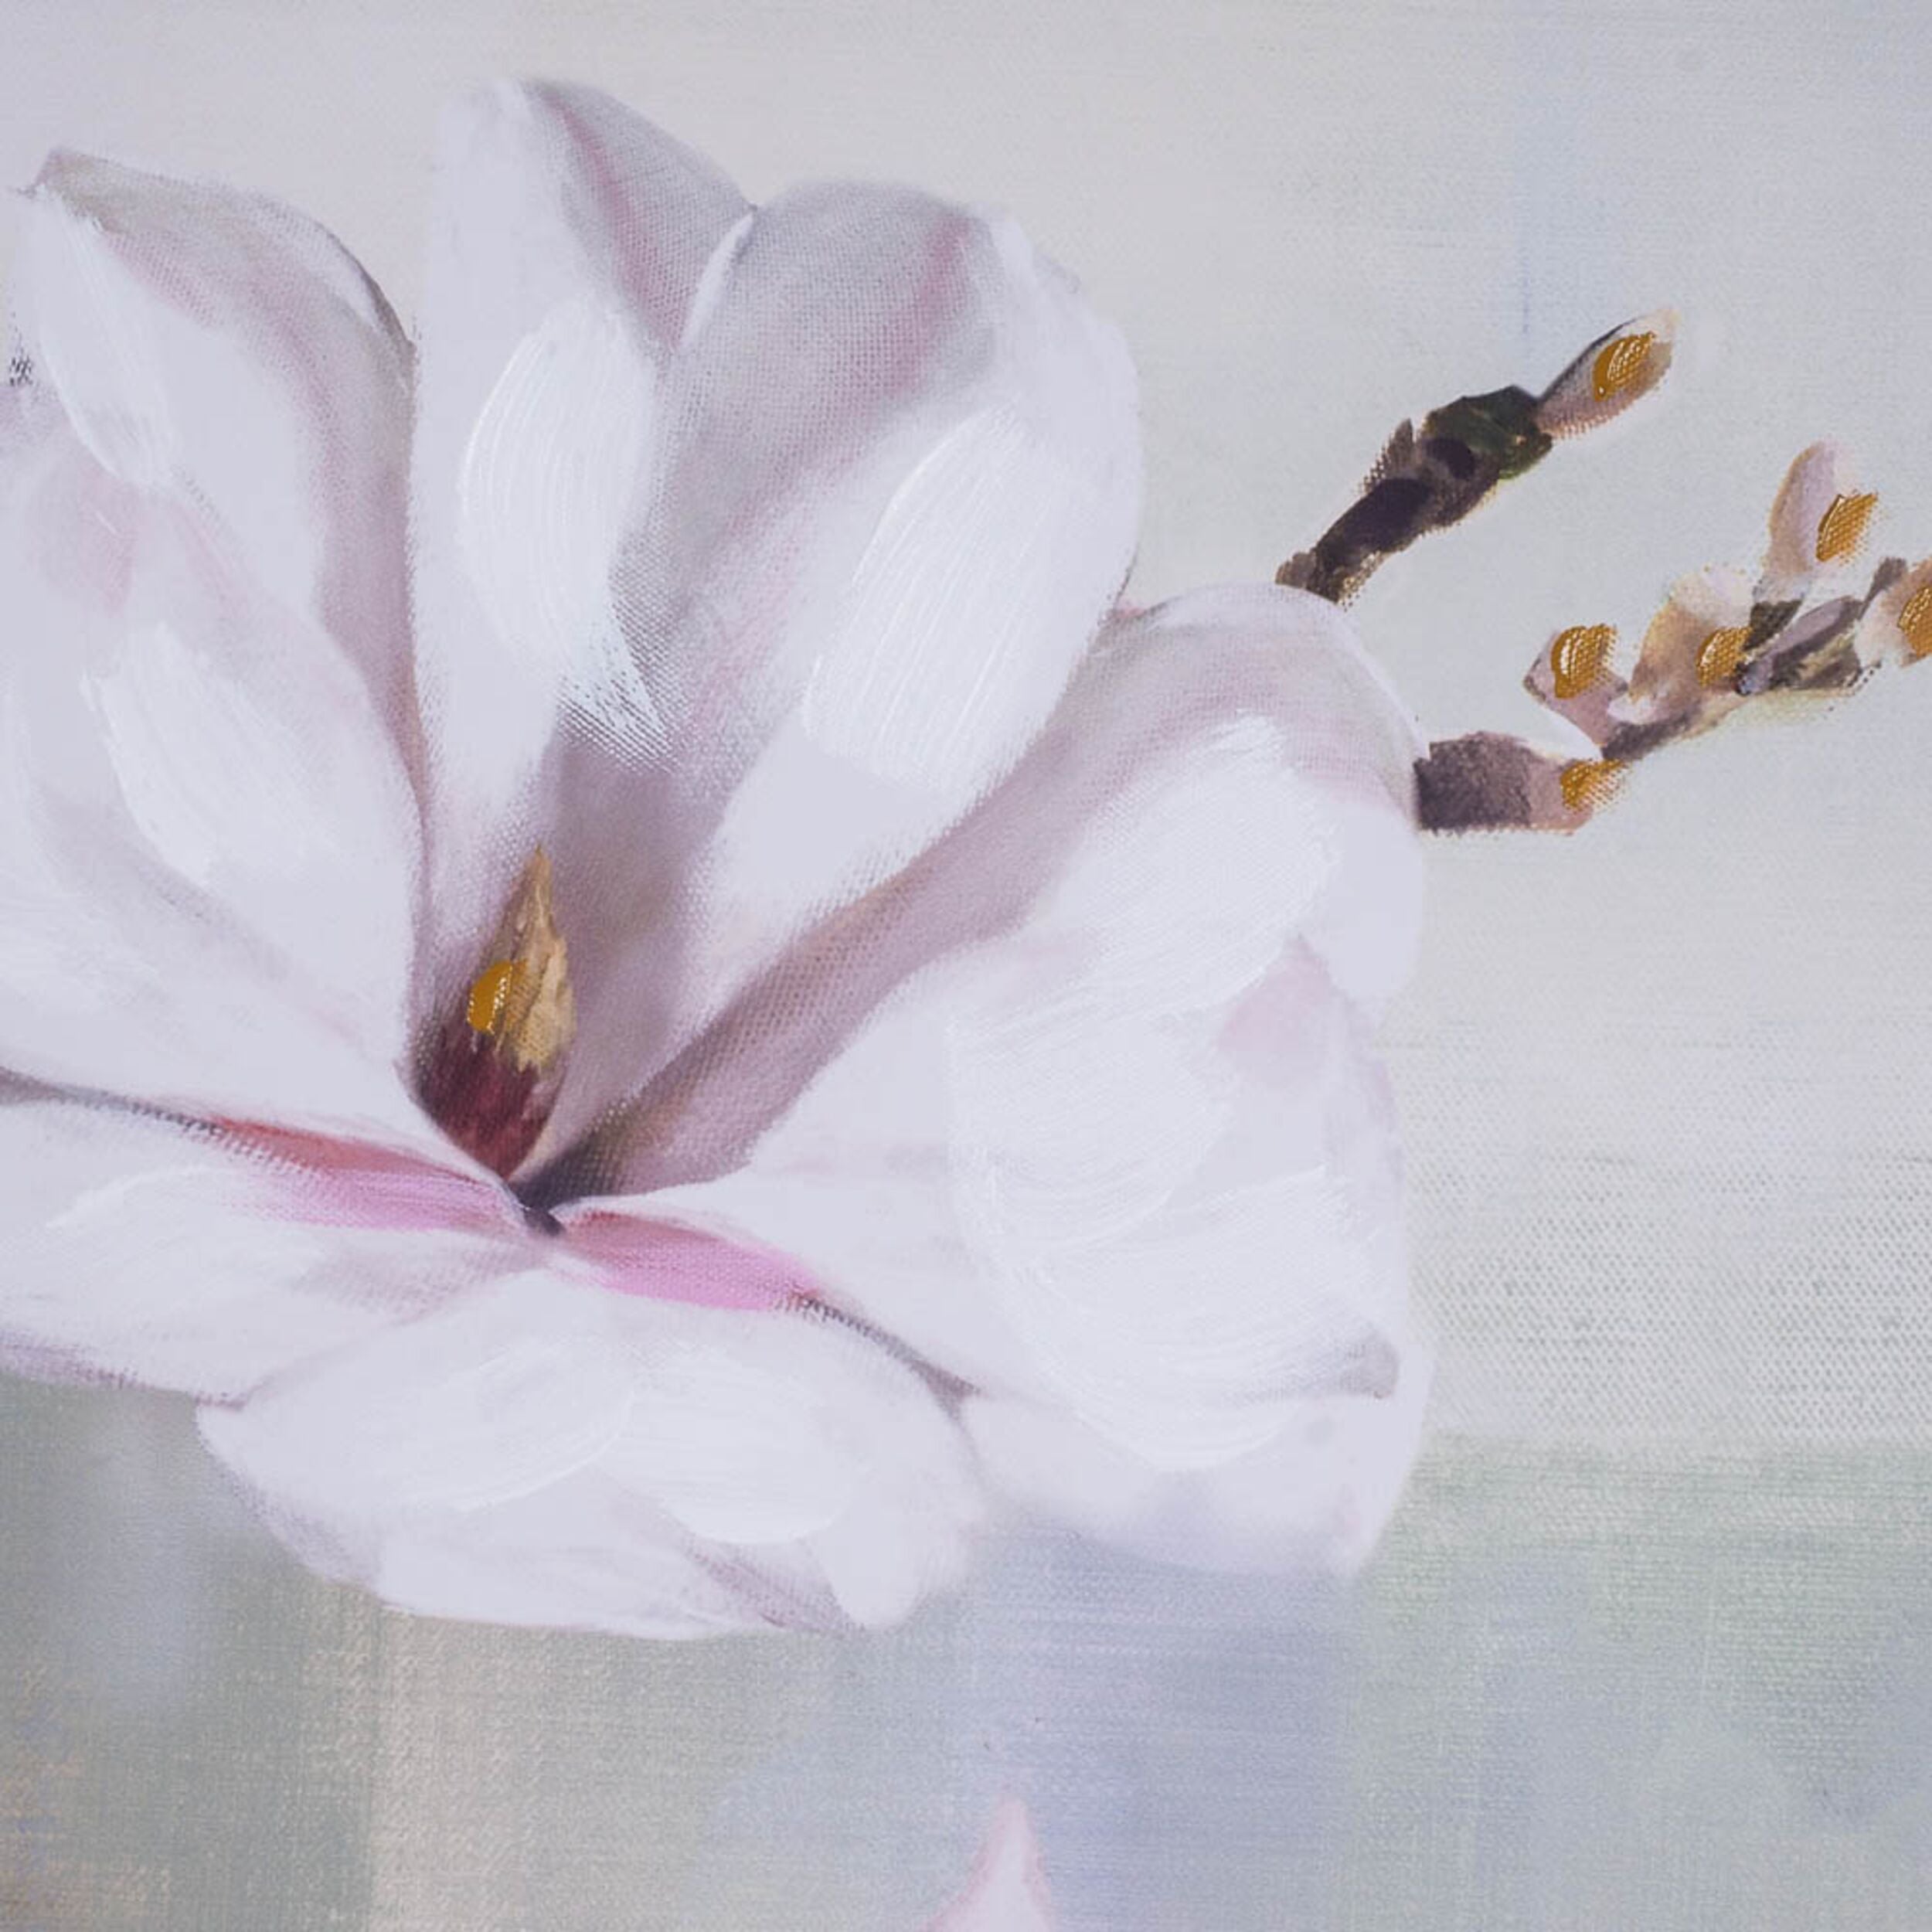 Arthouse Magnolia Blooms Framed Print 90x60cm